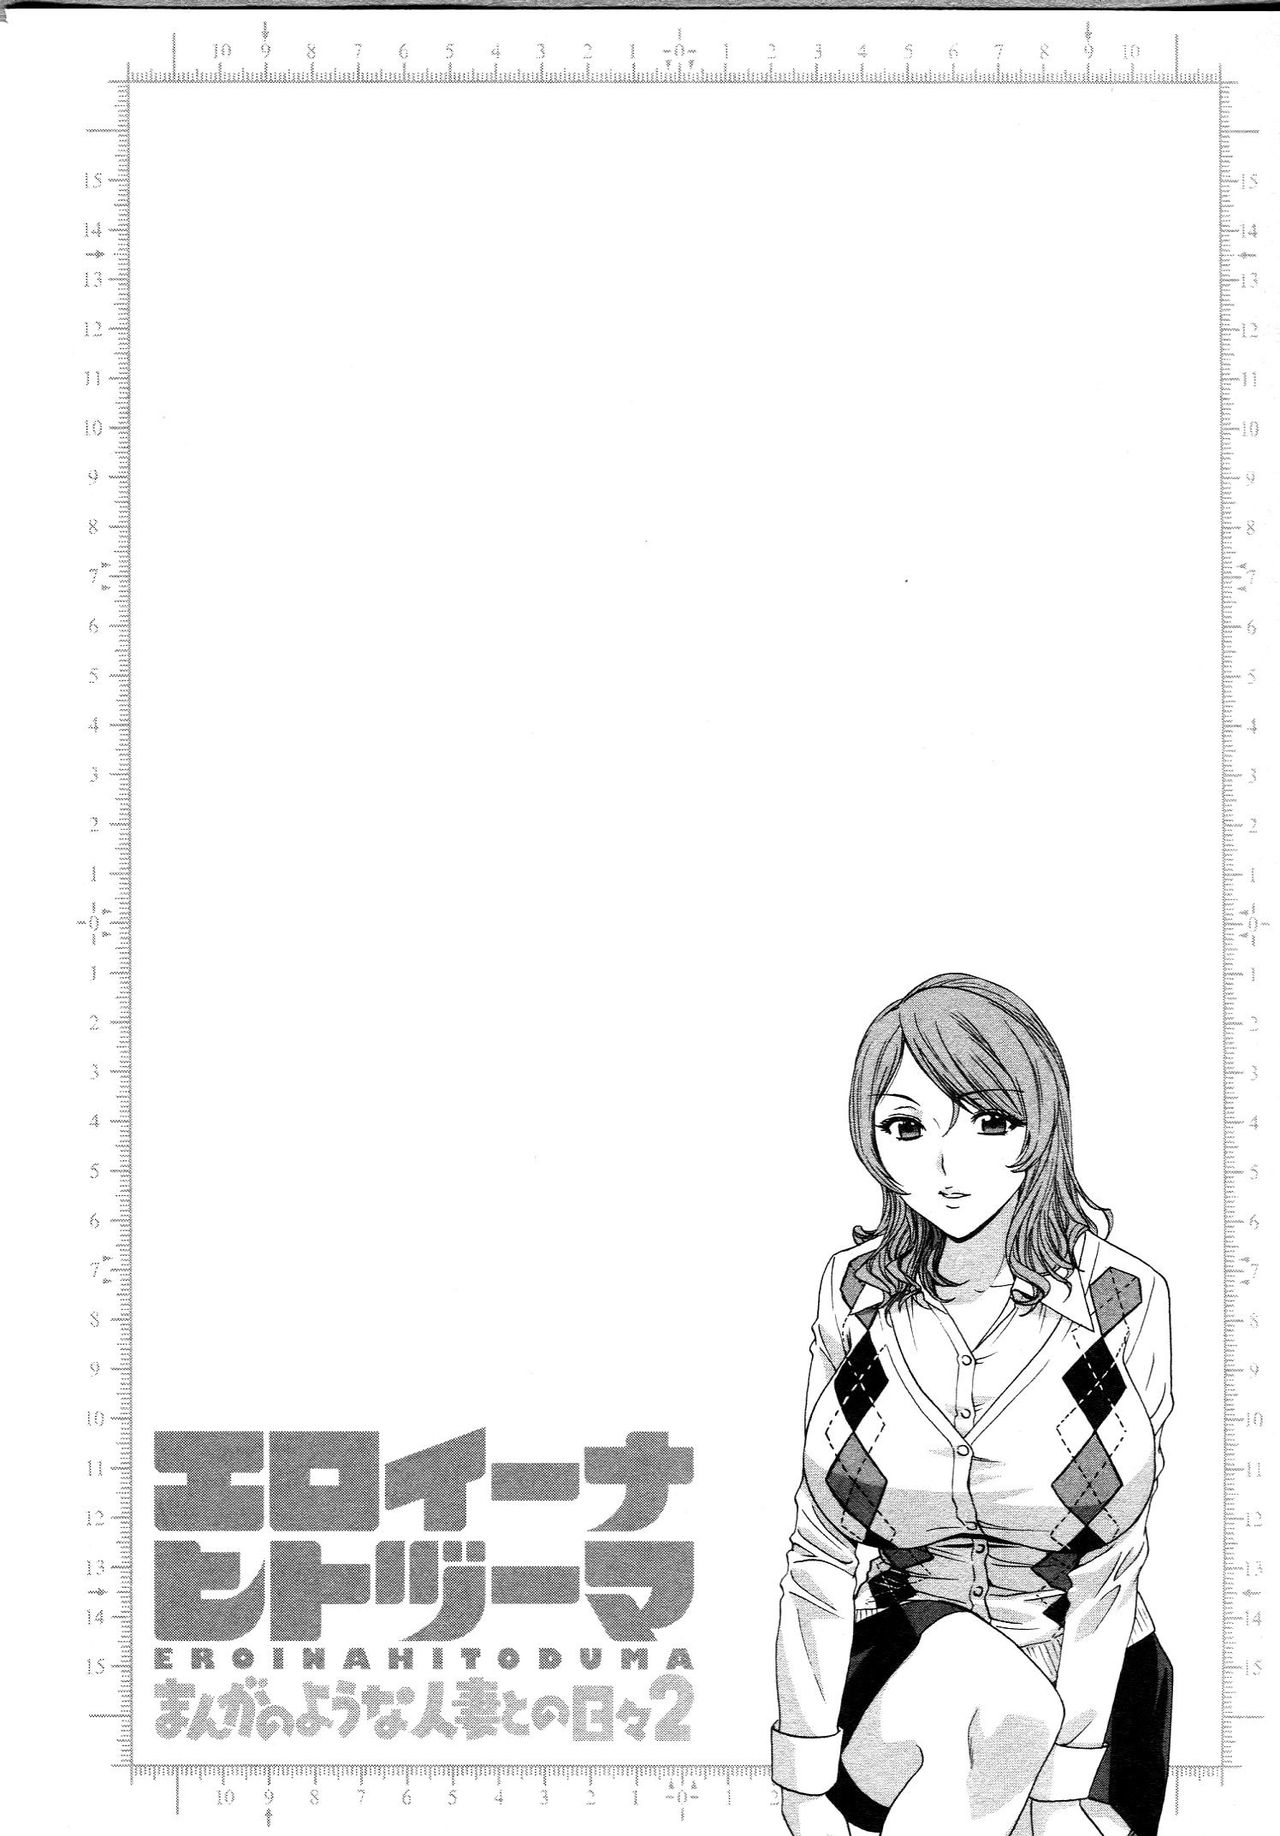 [Hidemaru] Eroina Hitoduma - Manga no youna Hitozuma to no Hibi 2 | Life with Married Women Just Like a Manga 2 [German] [SchmidtSST] 61